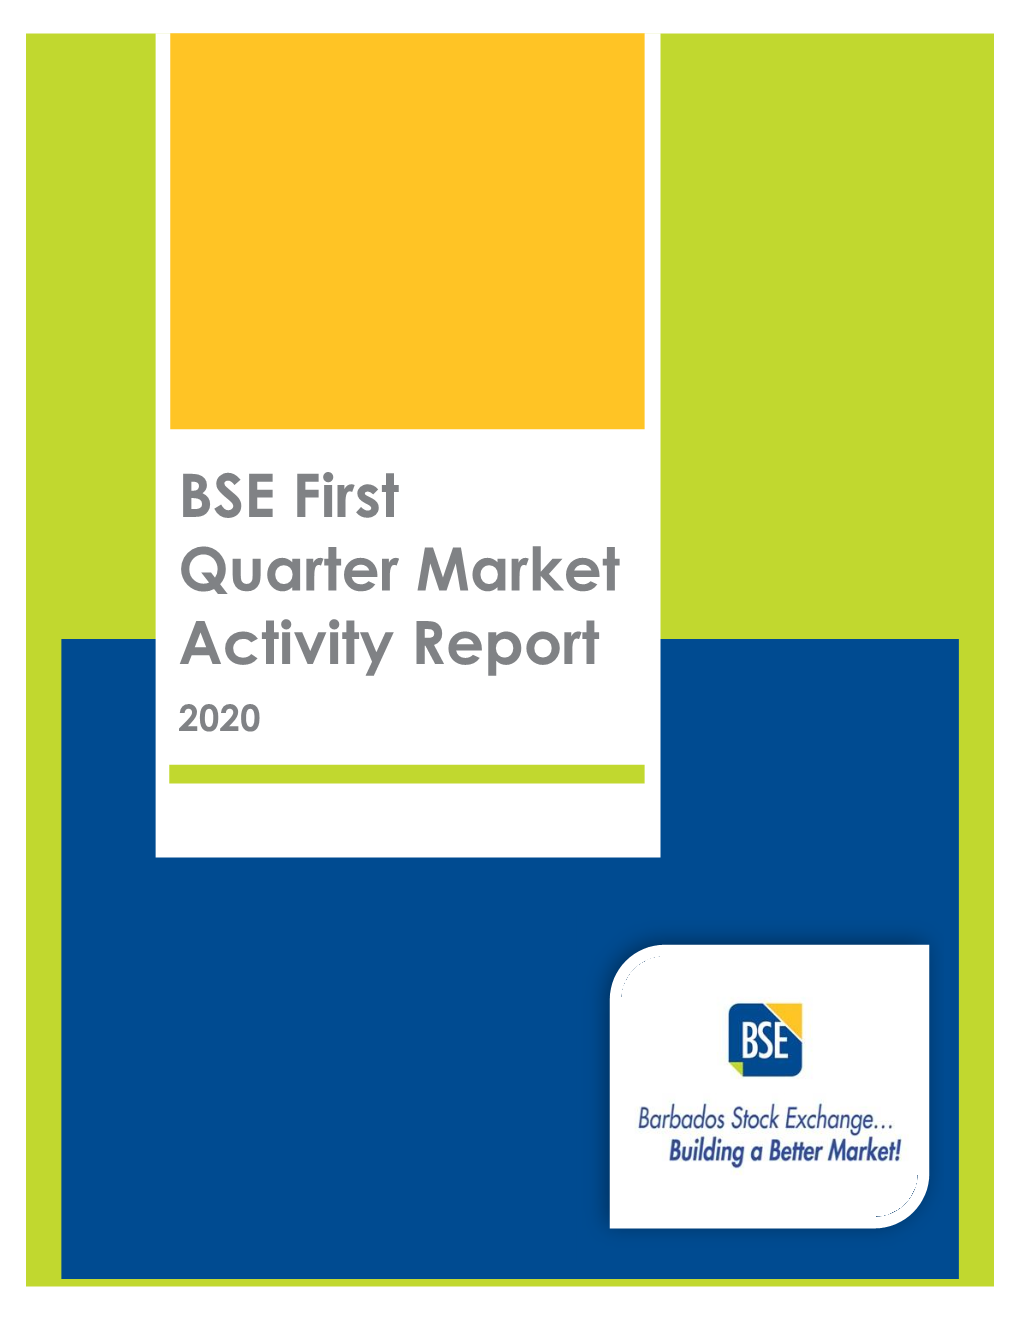 BSE First Quarter Market Activity Report